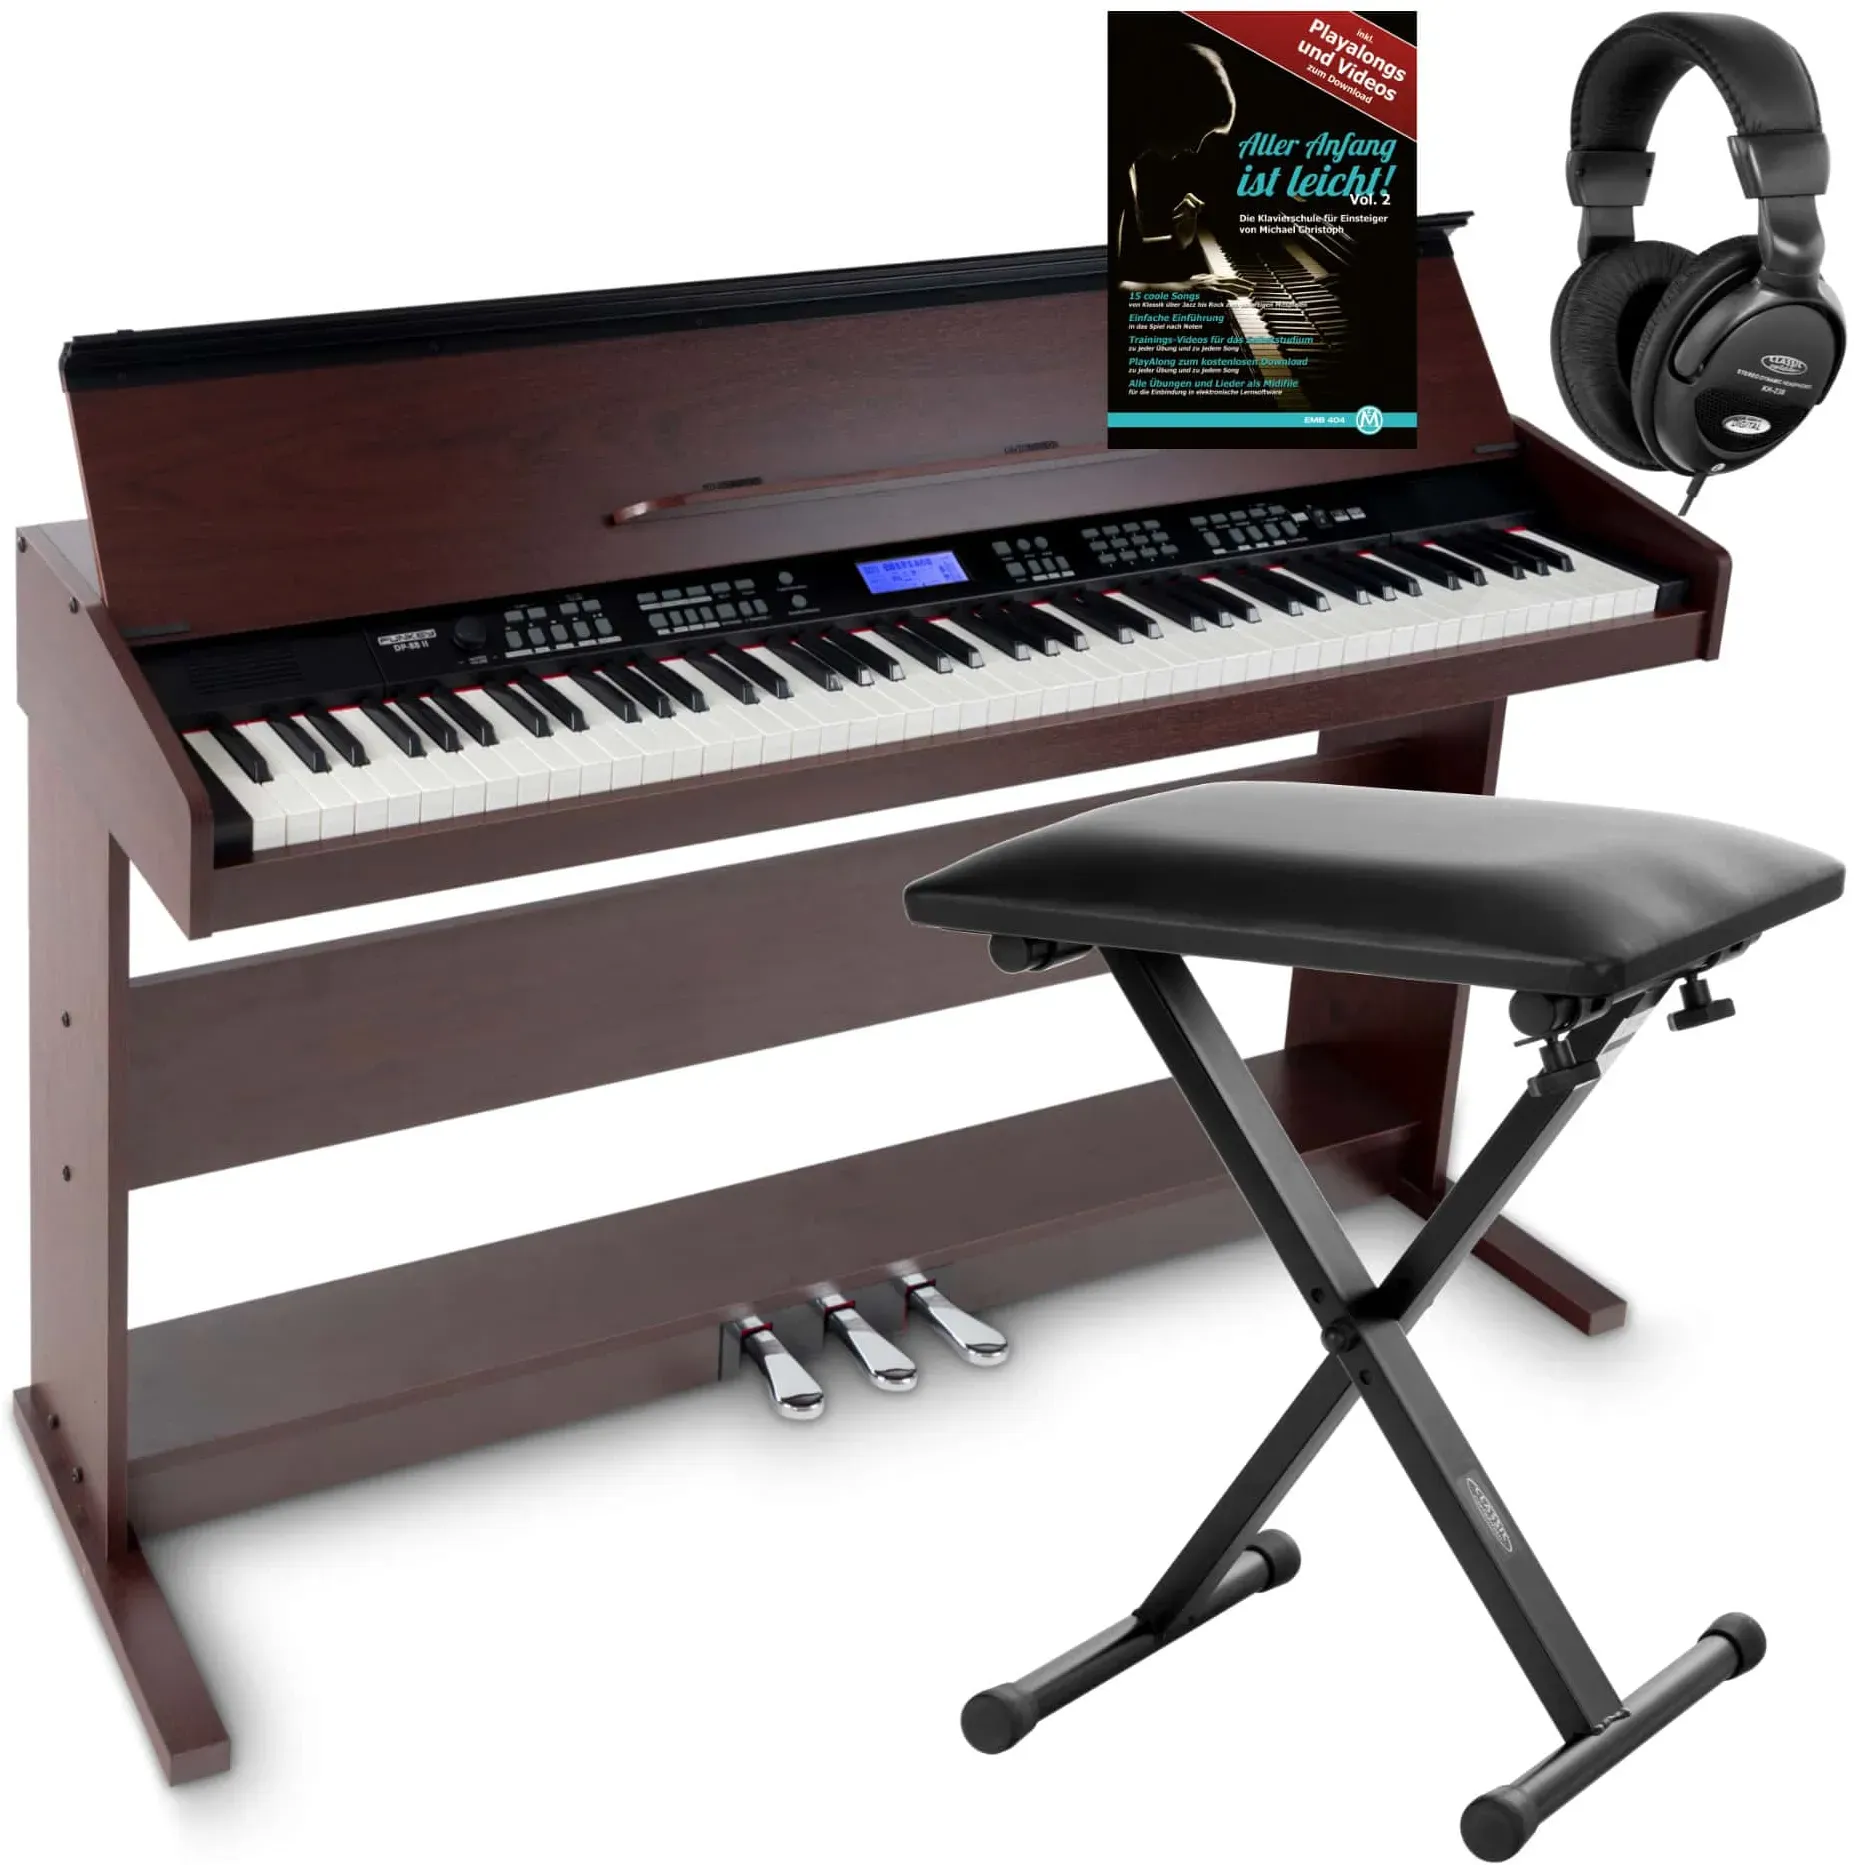 FunKey DP-88 II Digitalpiano braun Set mit Economy Keyboardbank, Kopfhörer und Klavierschule